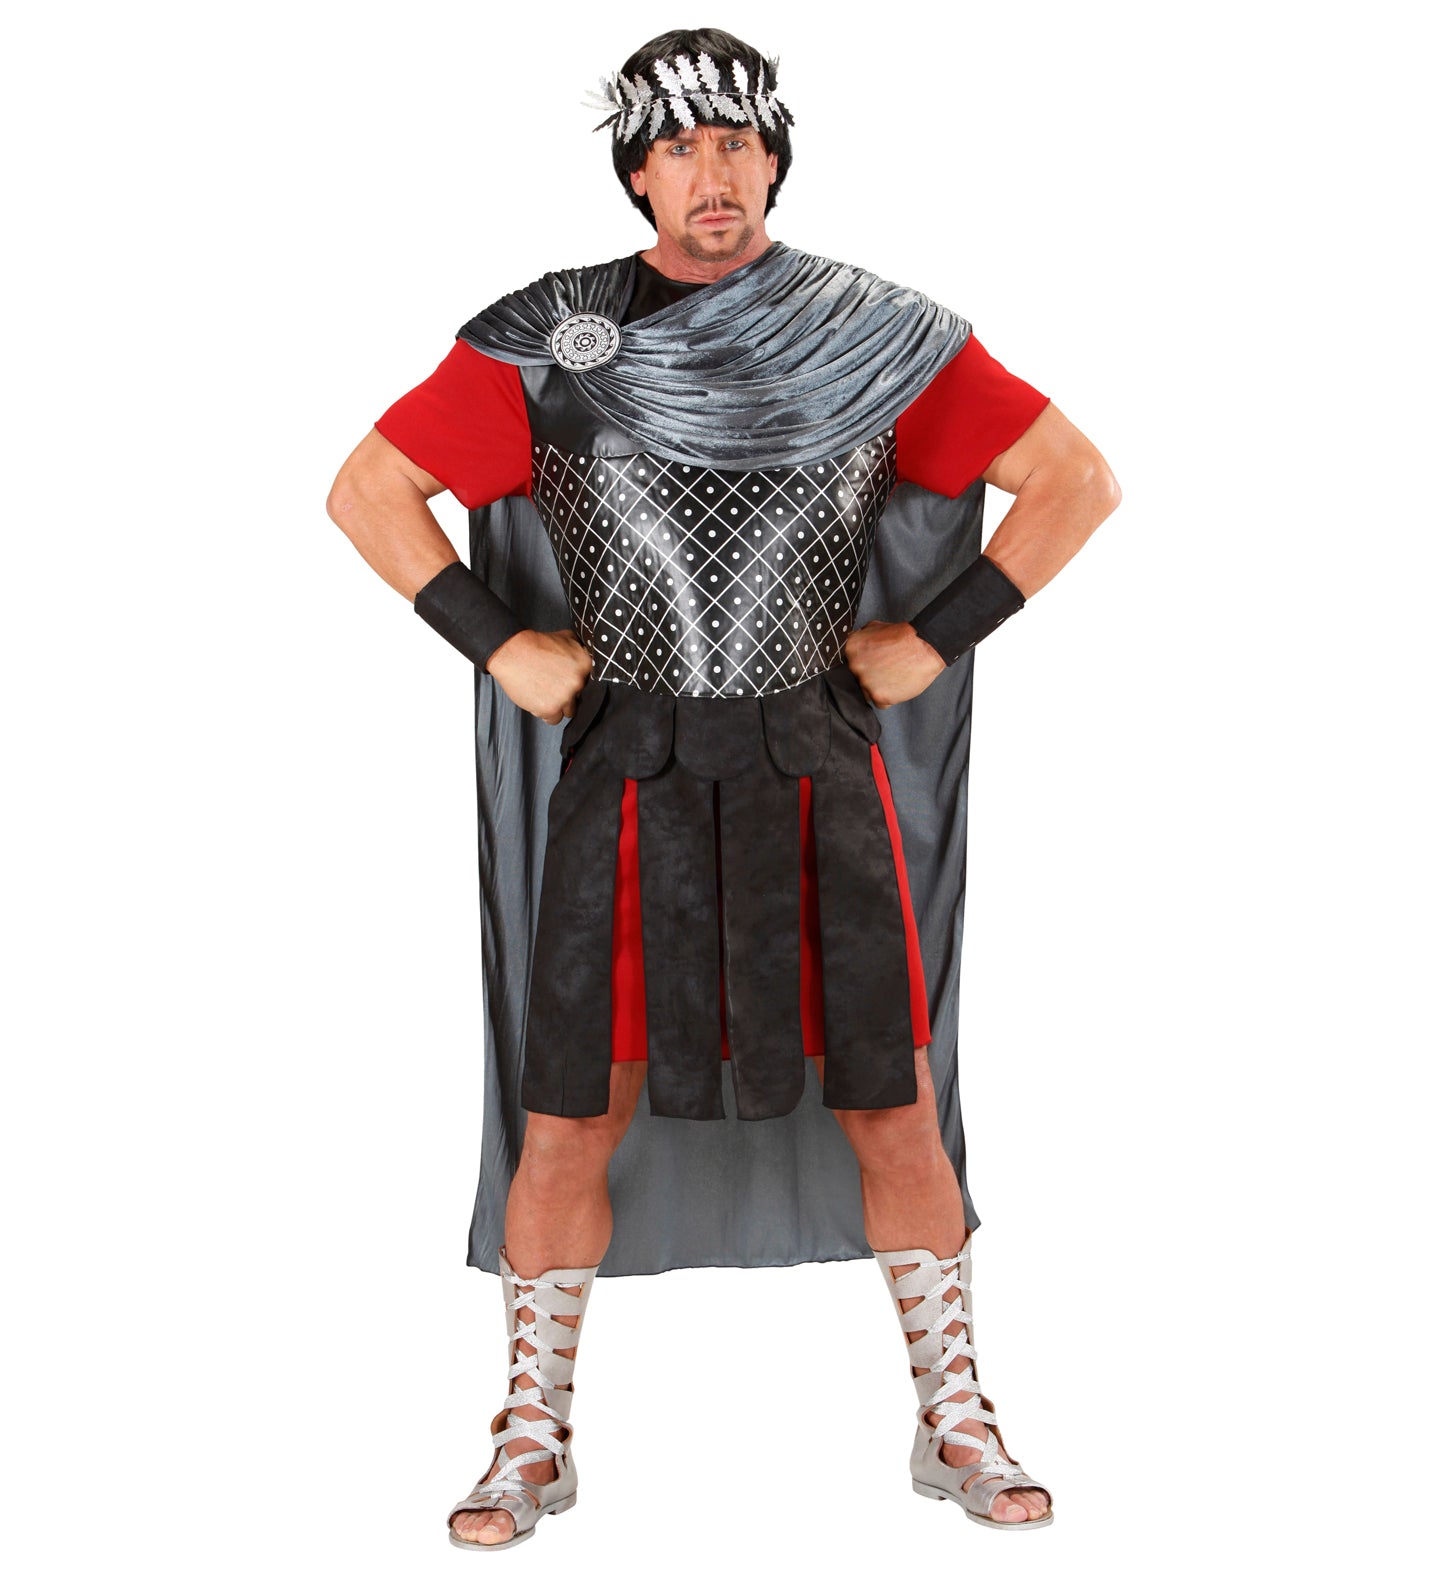 Men's Roman & Greek Costumes